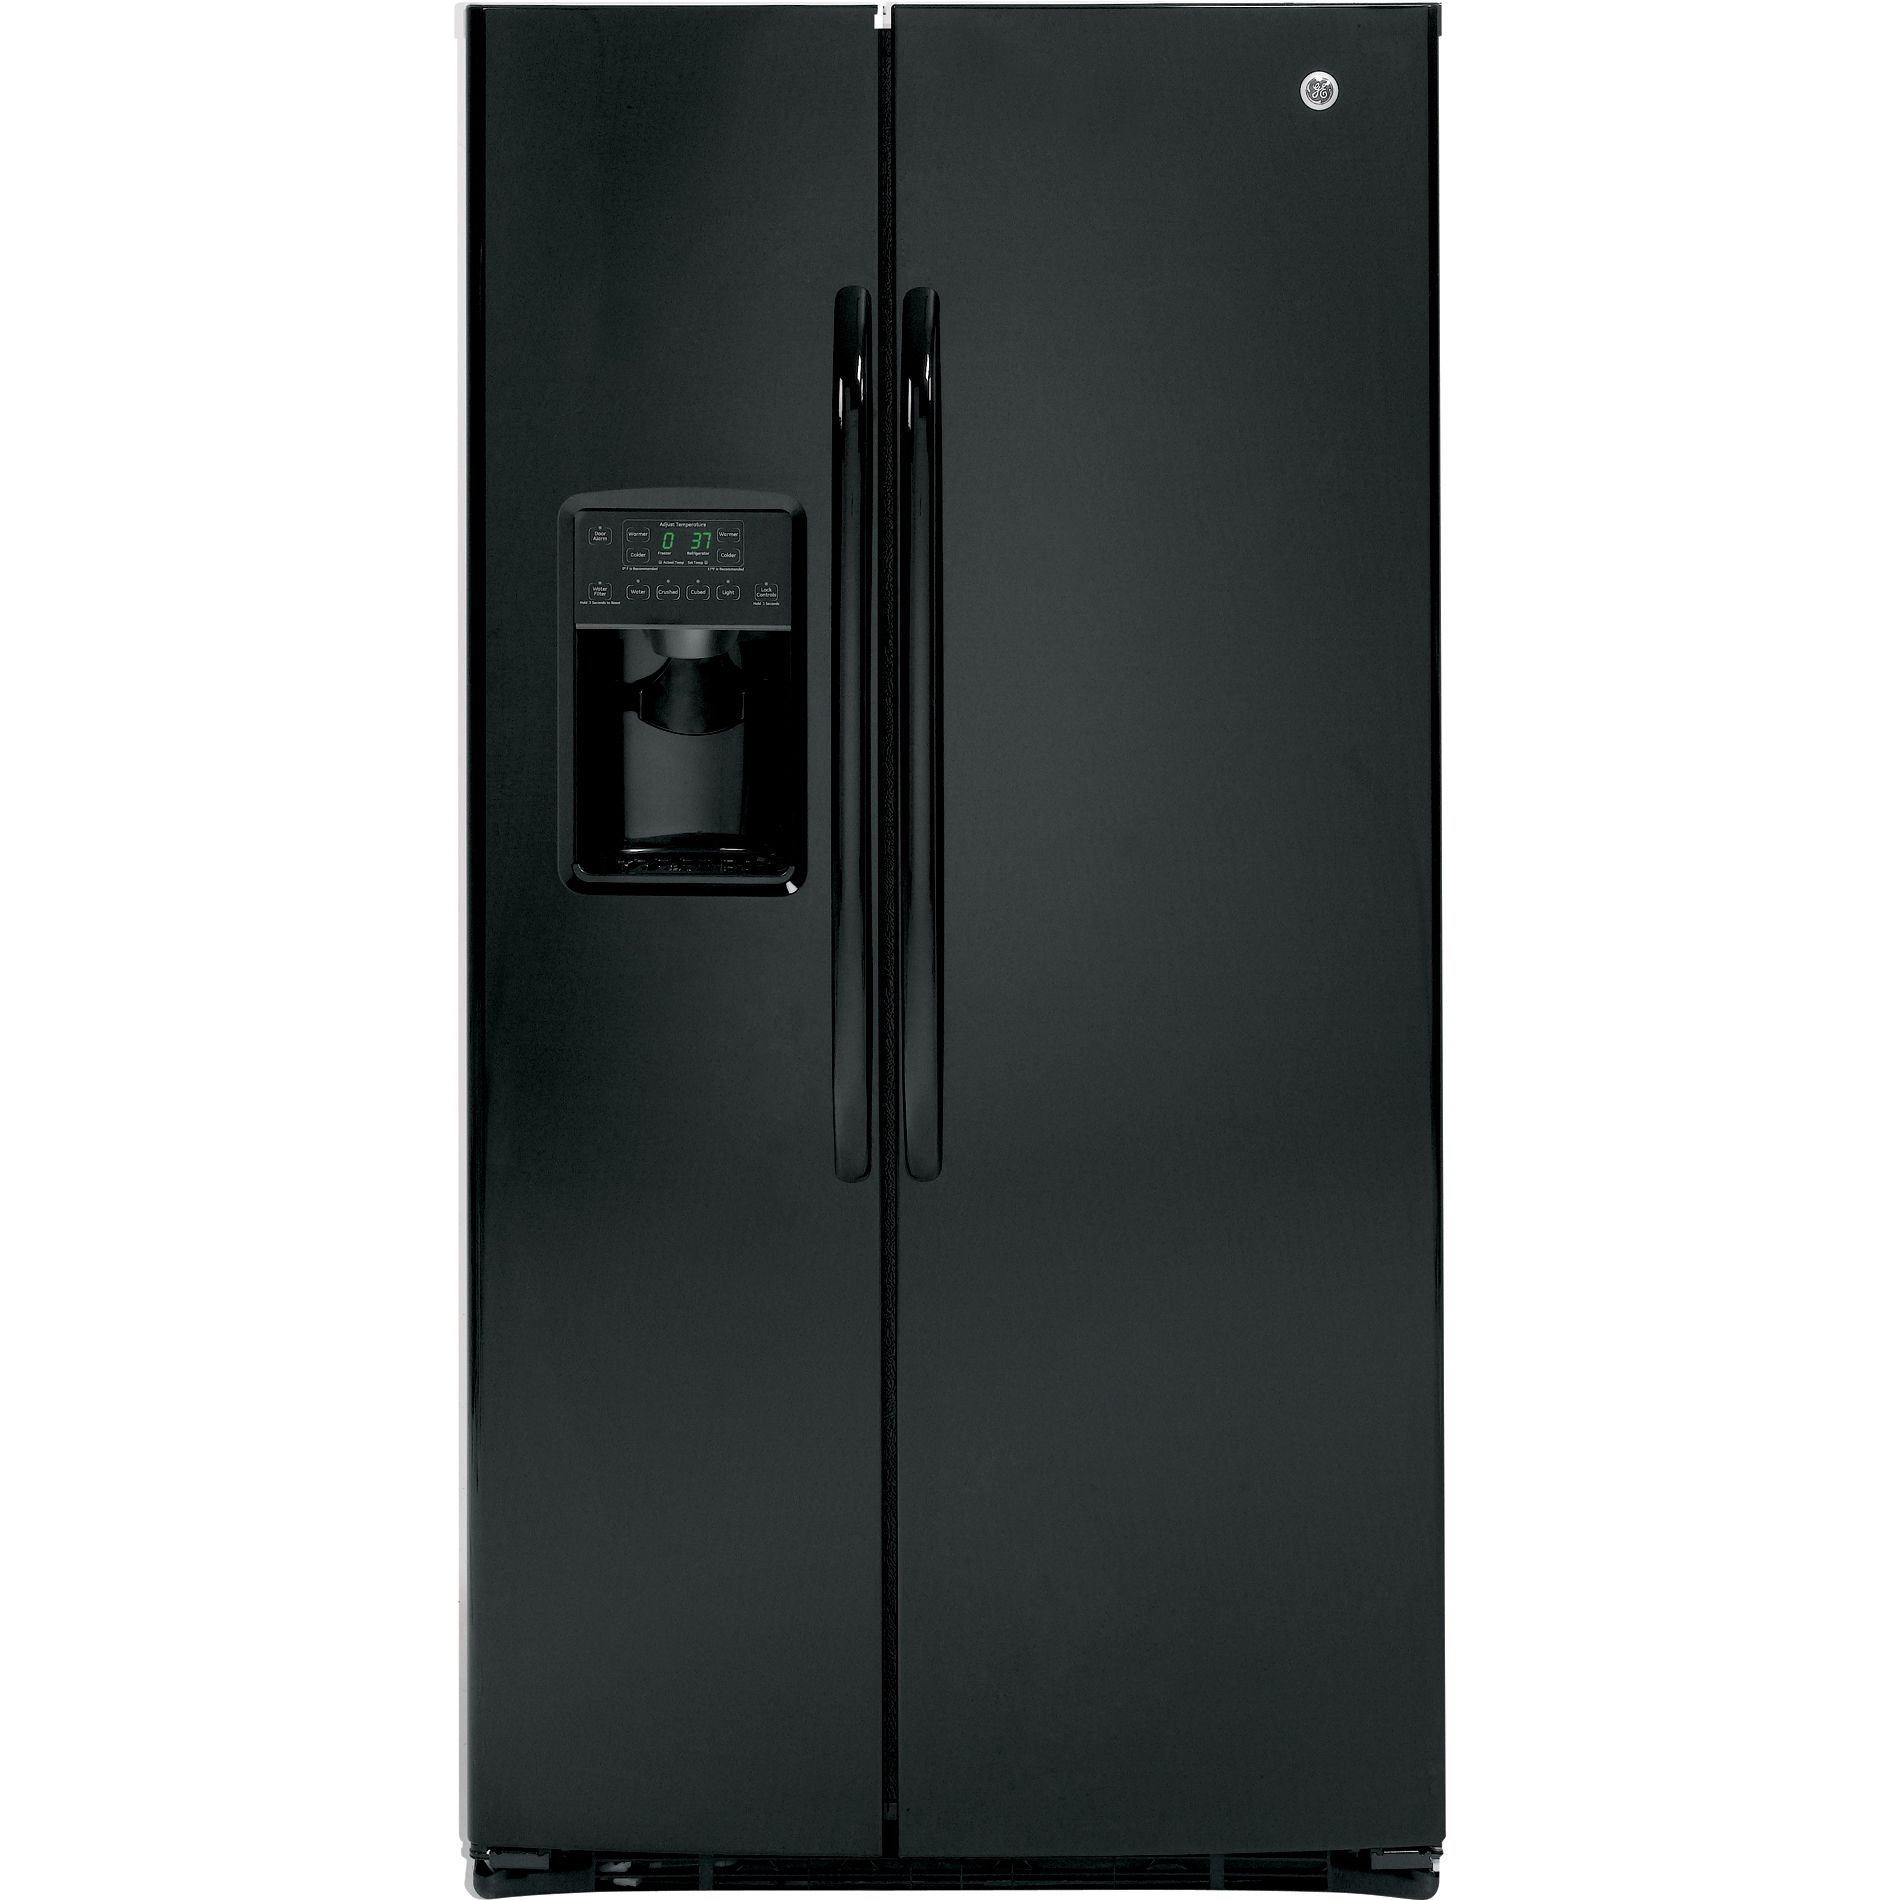 Refrigerator - N Series logo